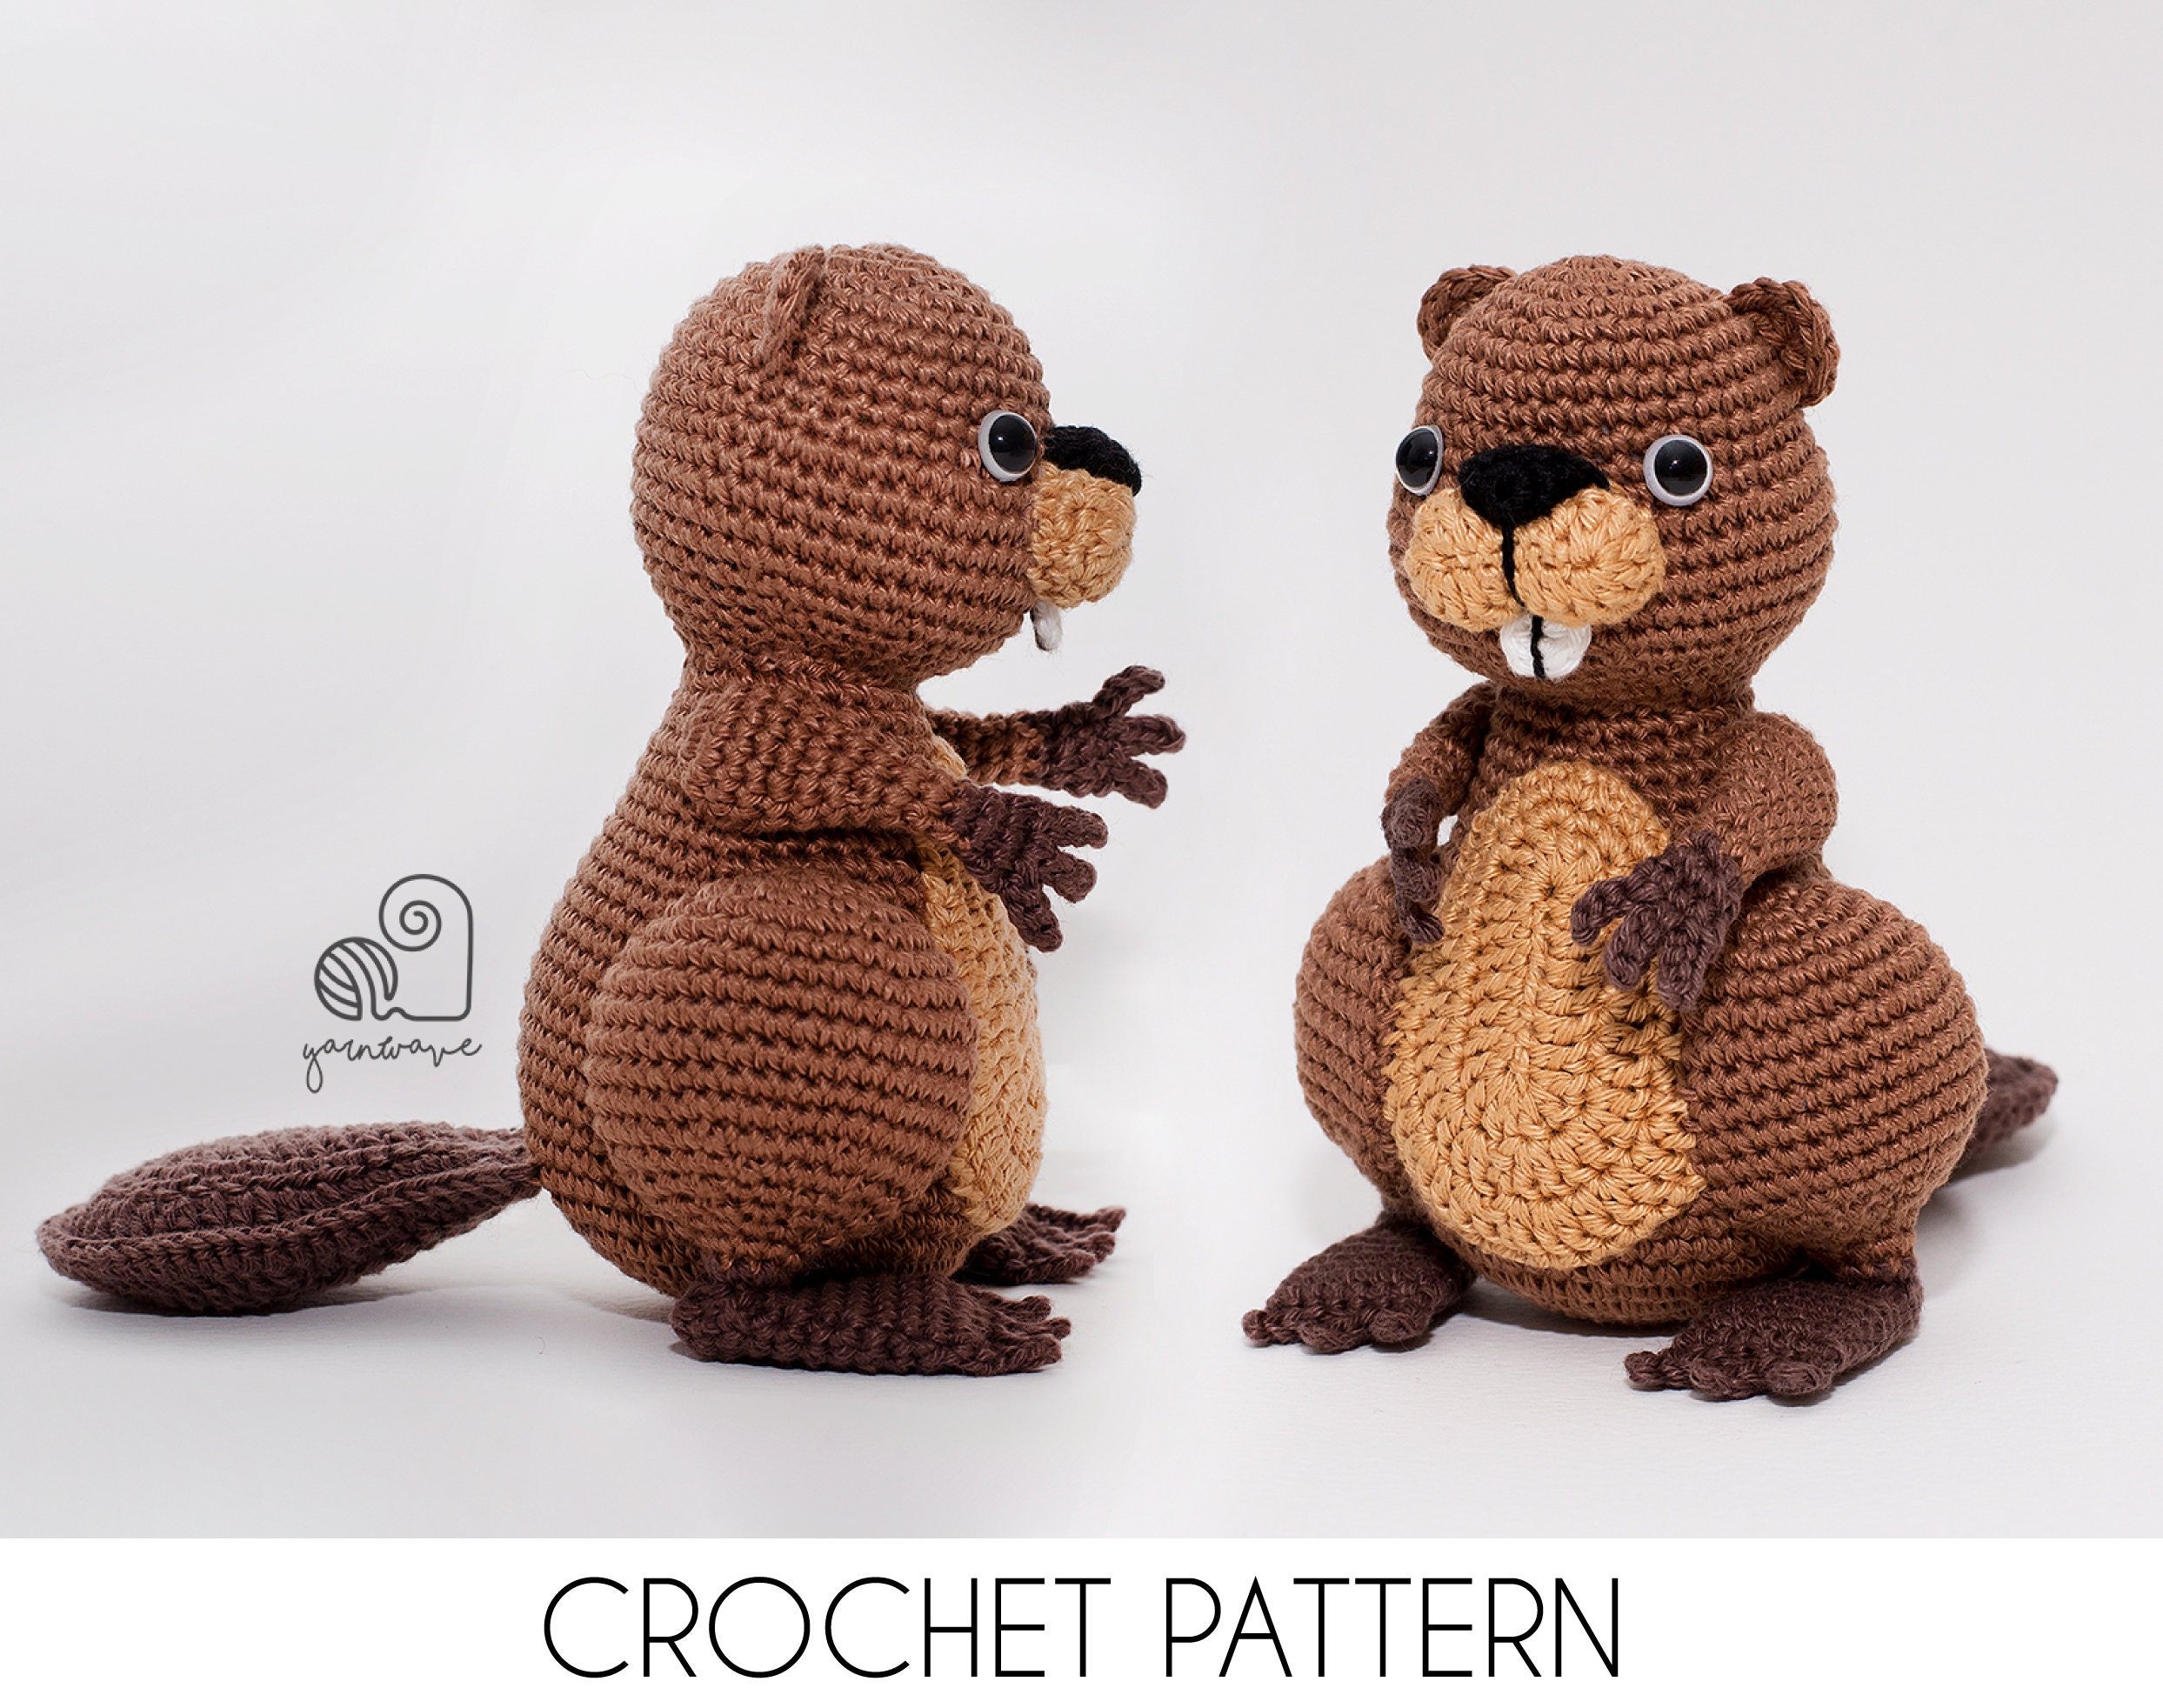 Crochet plushies and stuffed animals with a pattern by Mjambridge